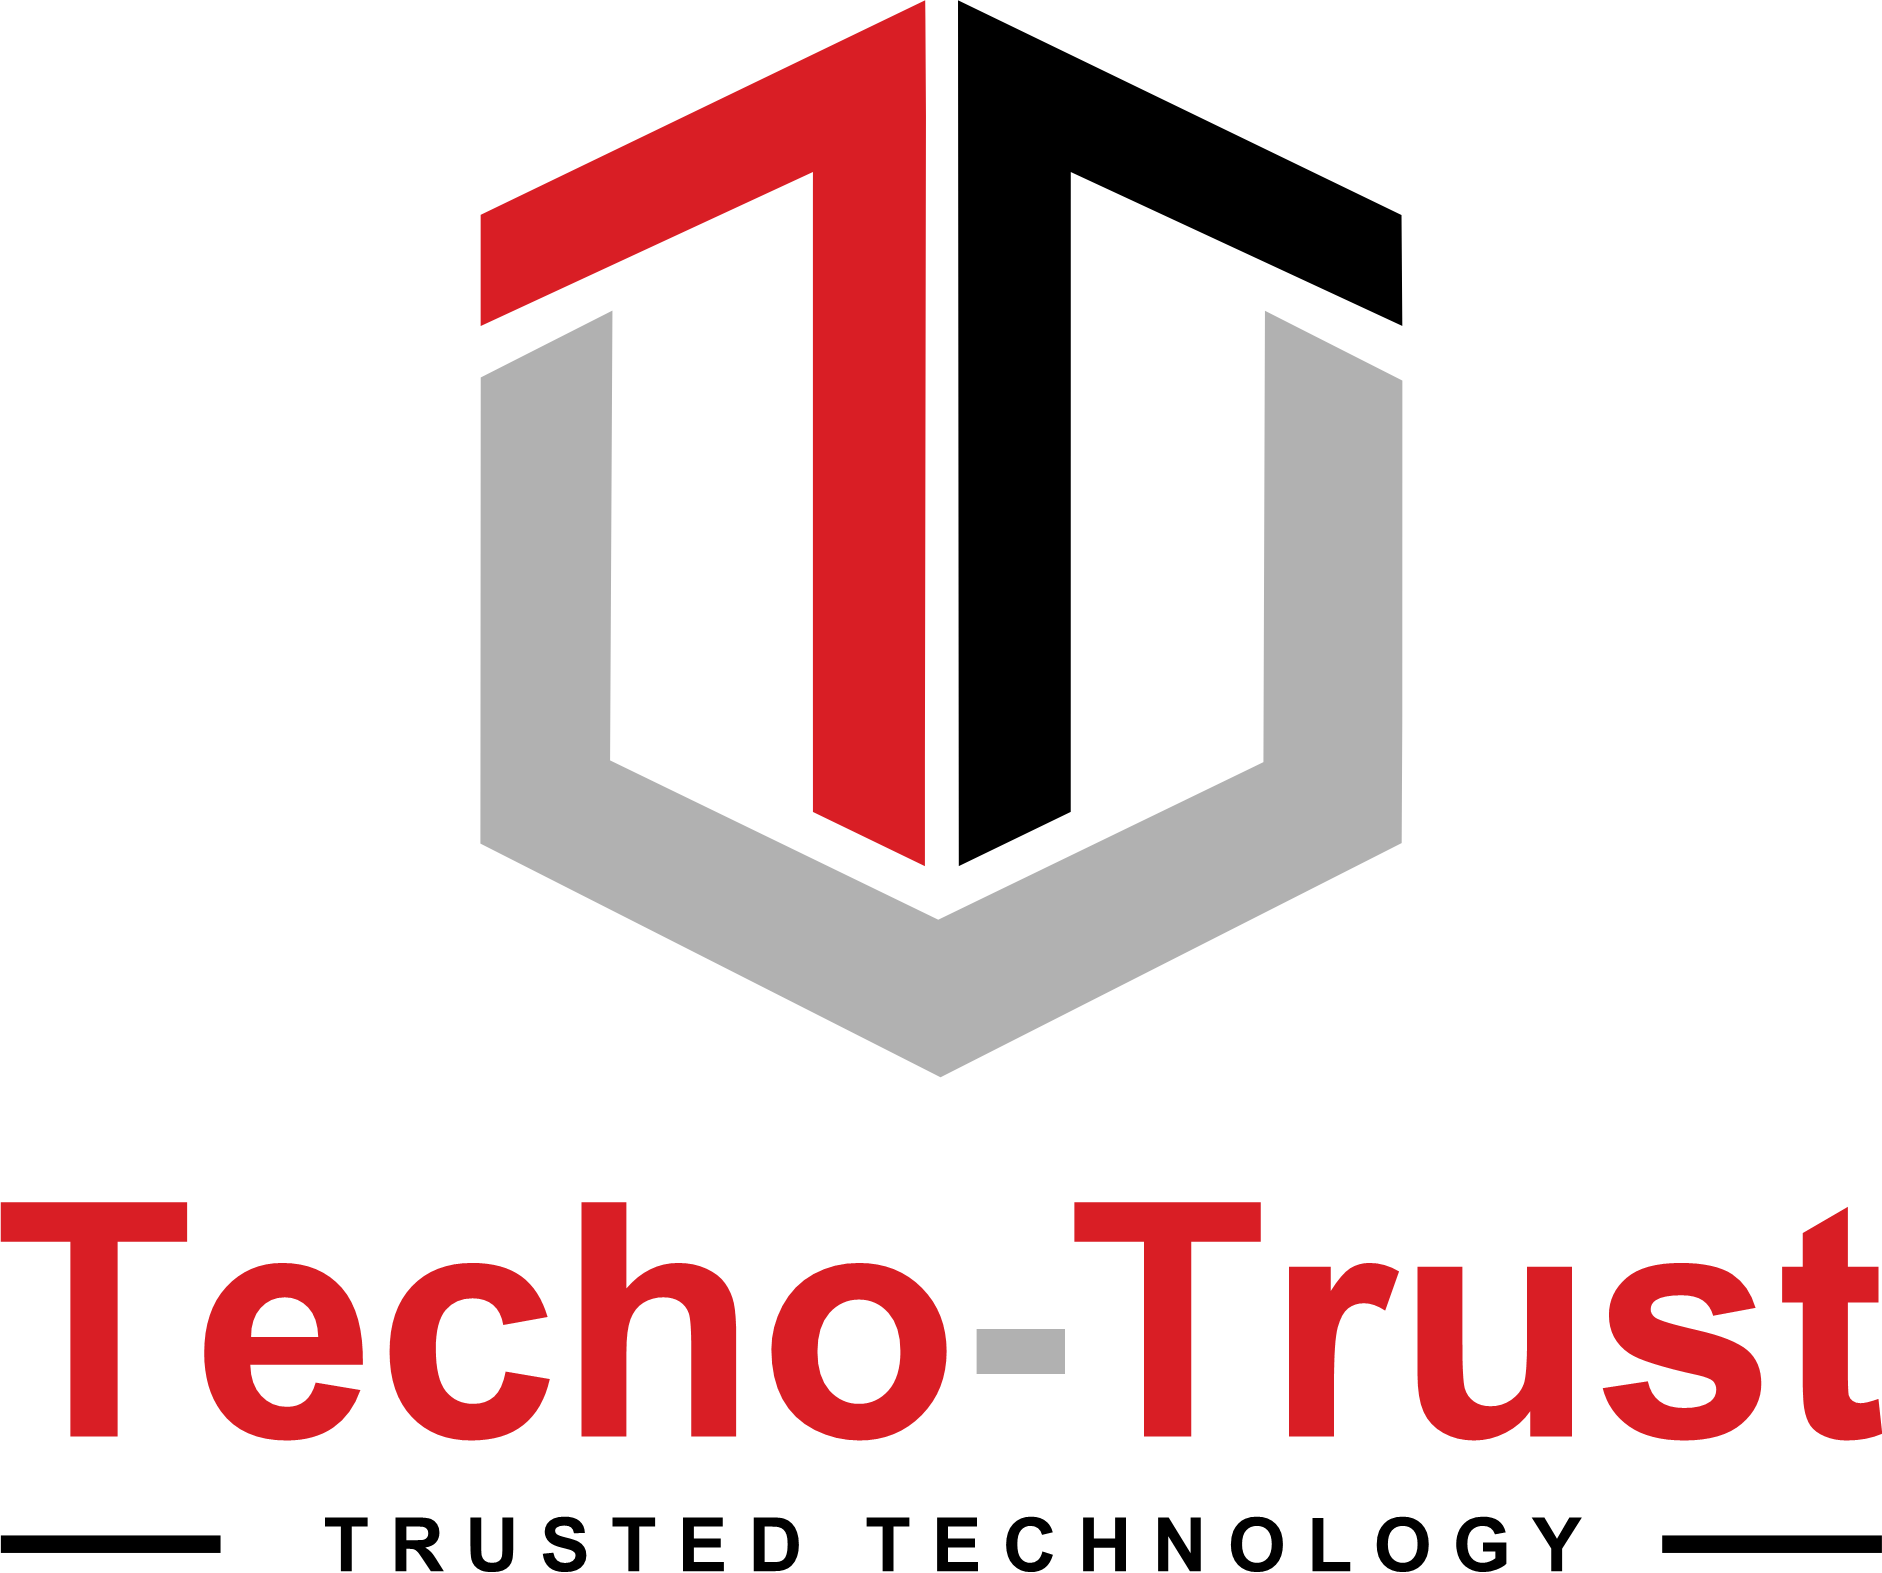 Techo Trust